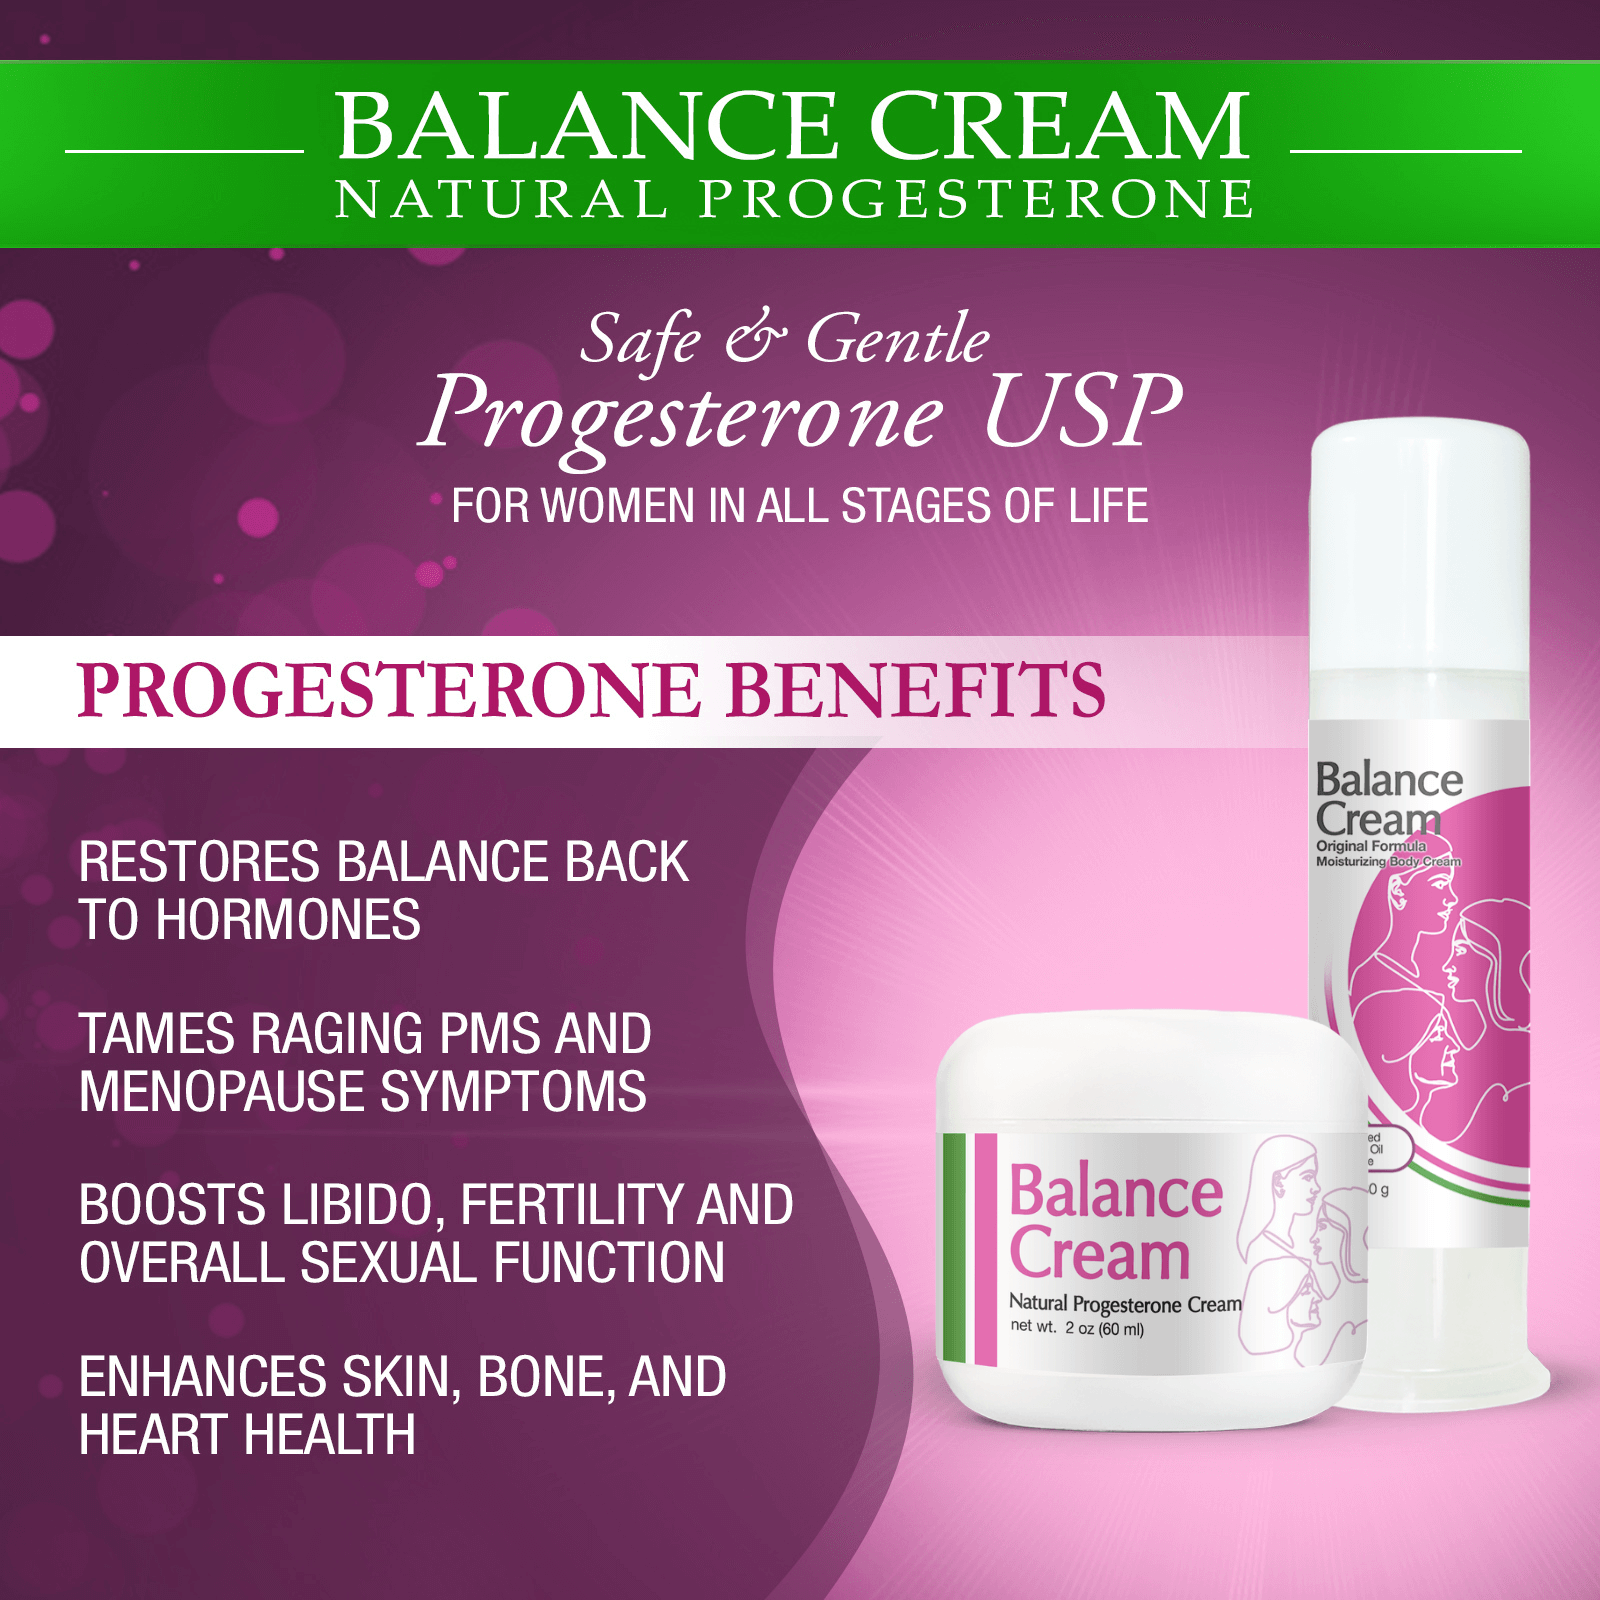 Balance Cream Natural Progesterone - WFP Infographic